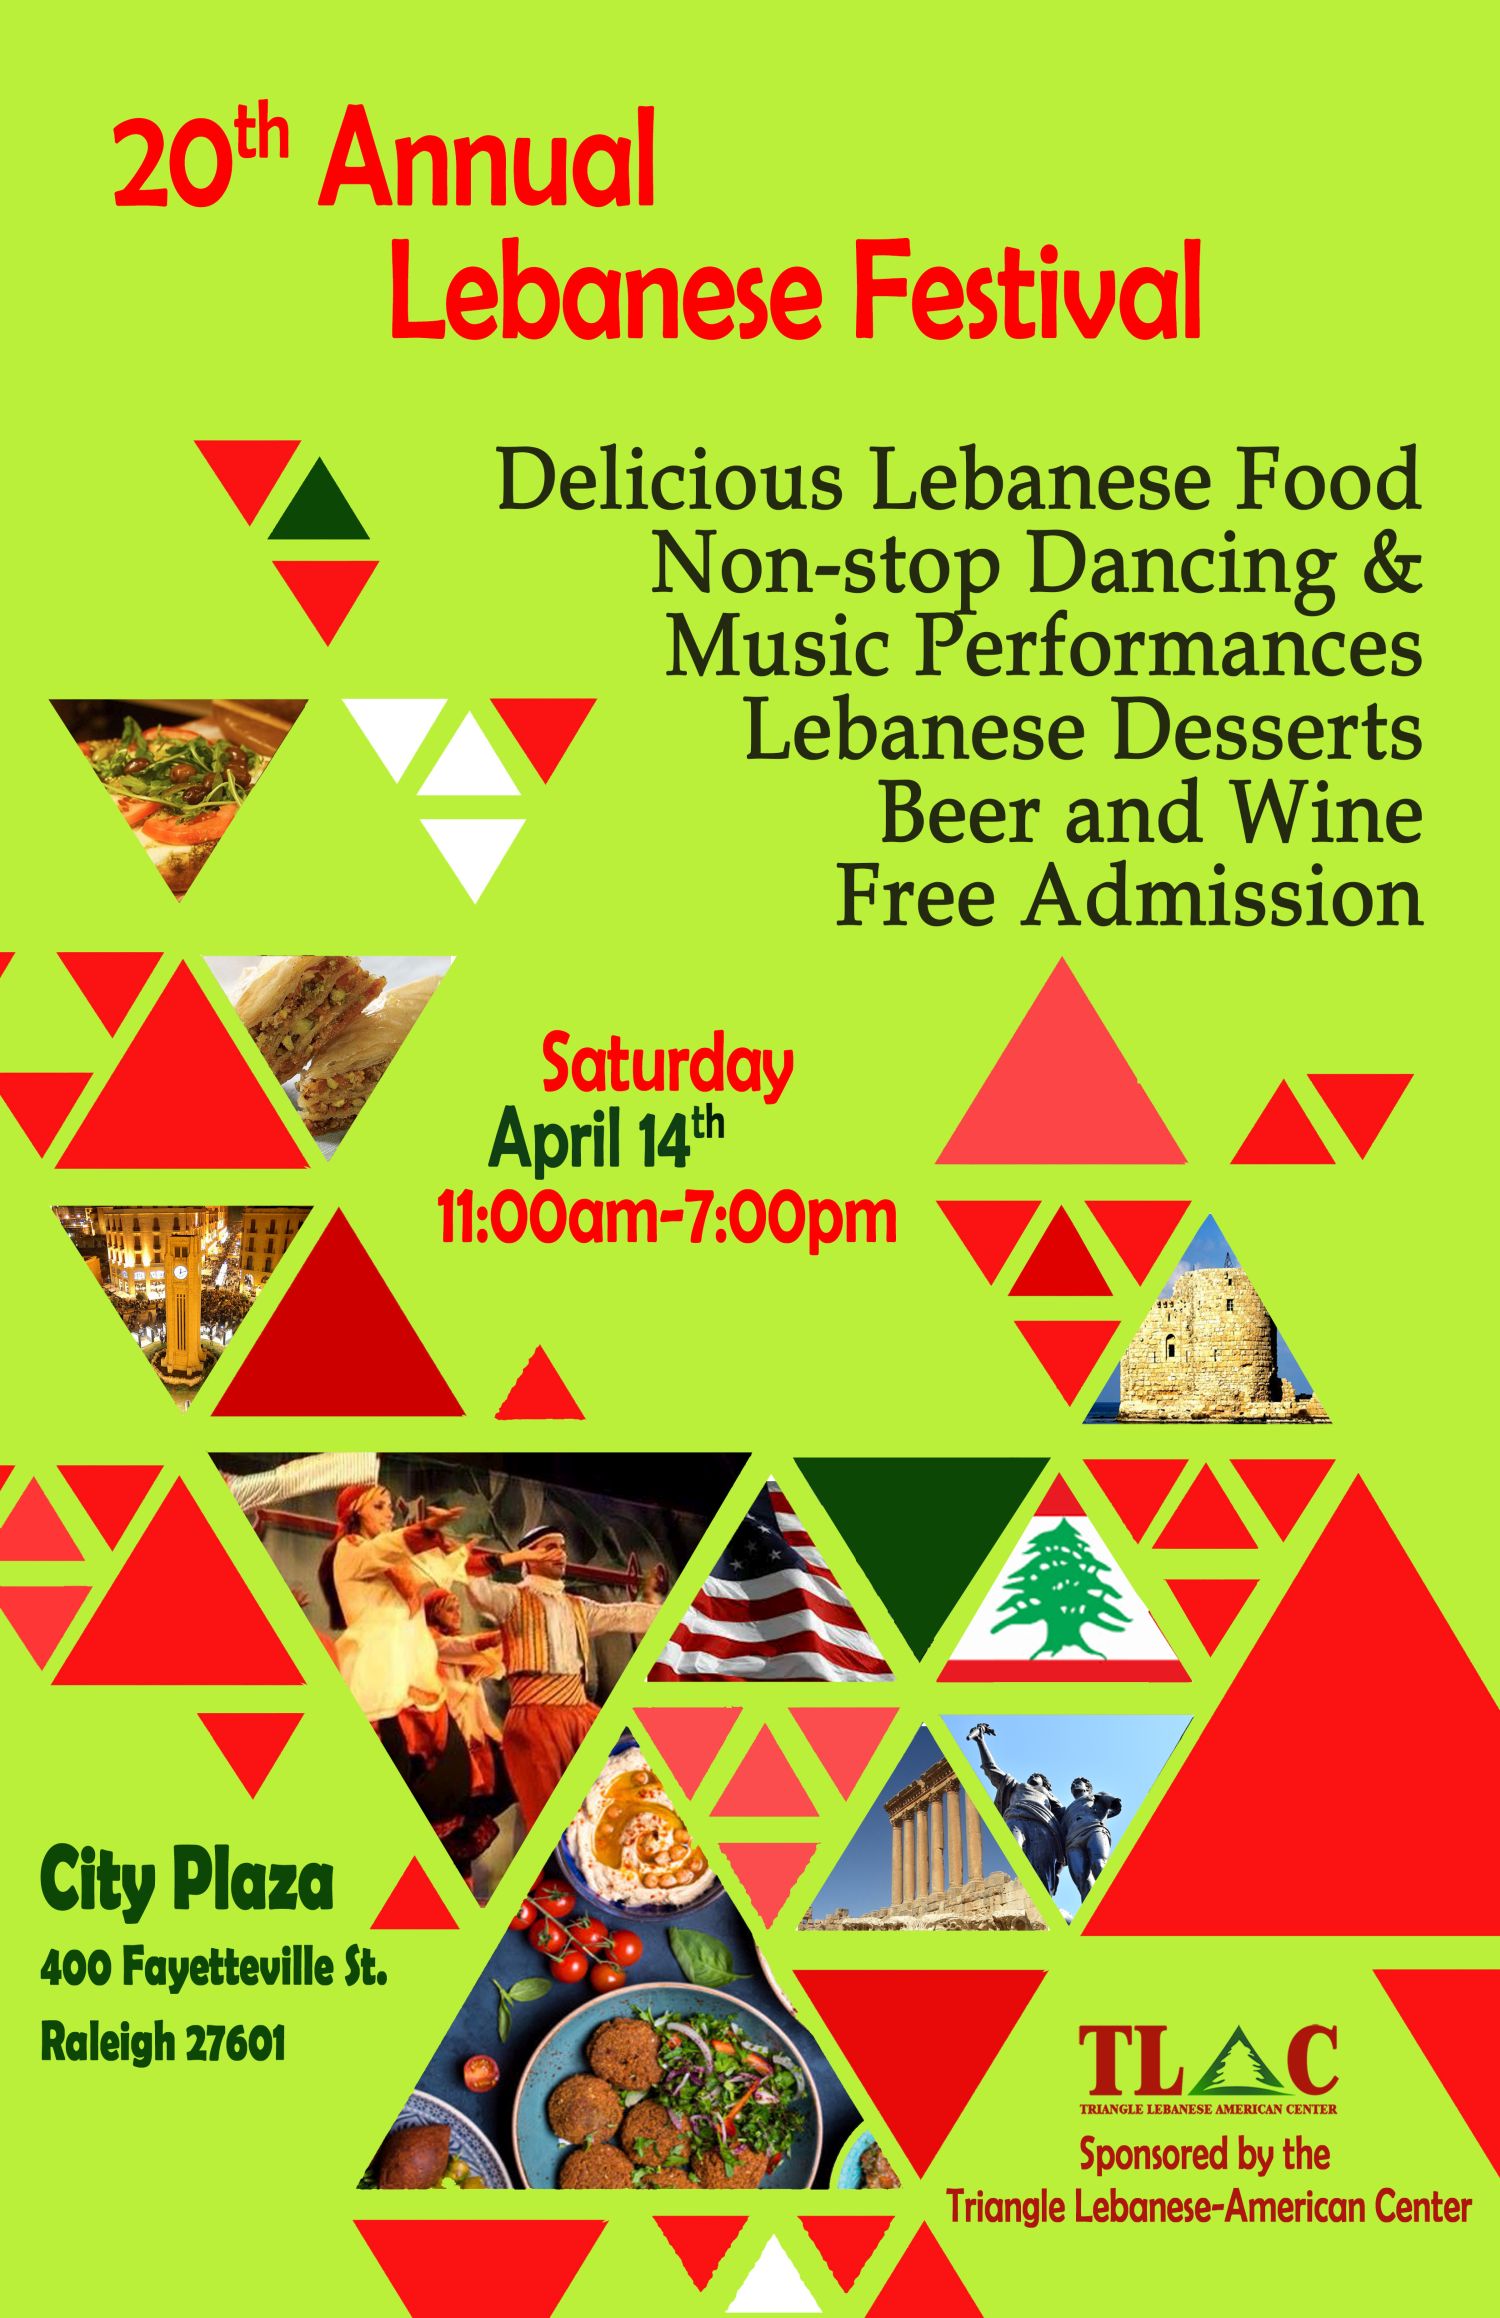 2018 Lebanese Festival Triangle LebaneseAmerican Center (TLAC)